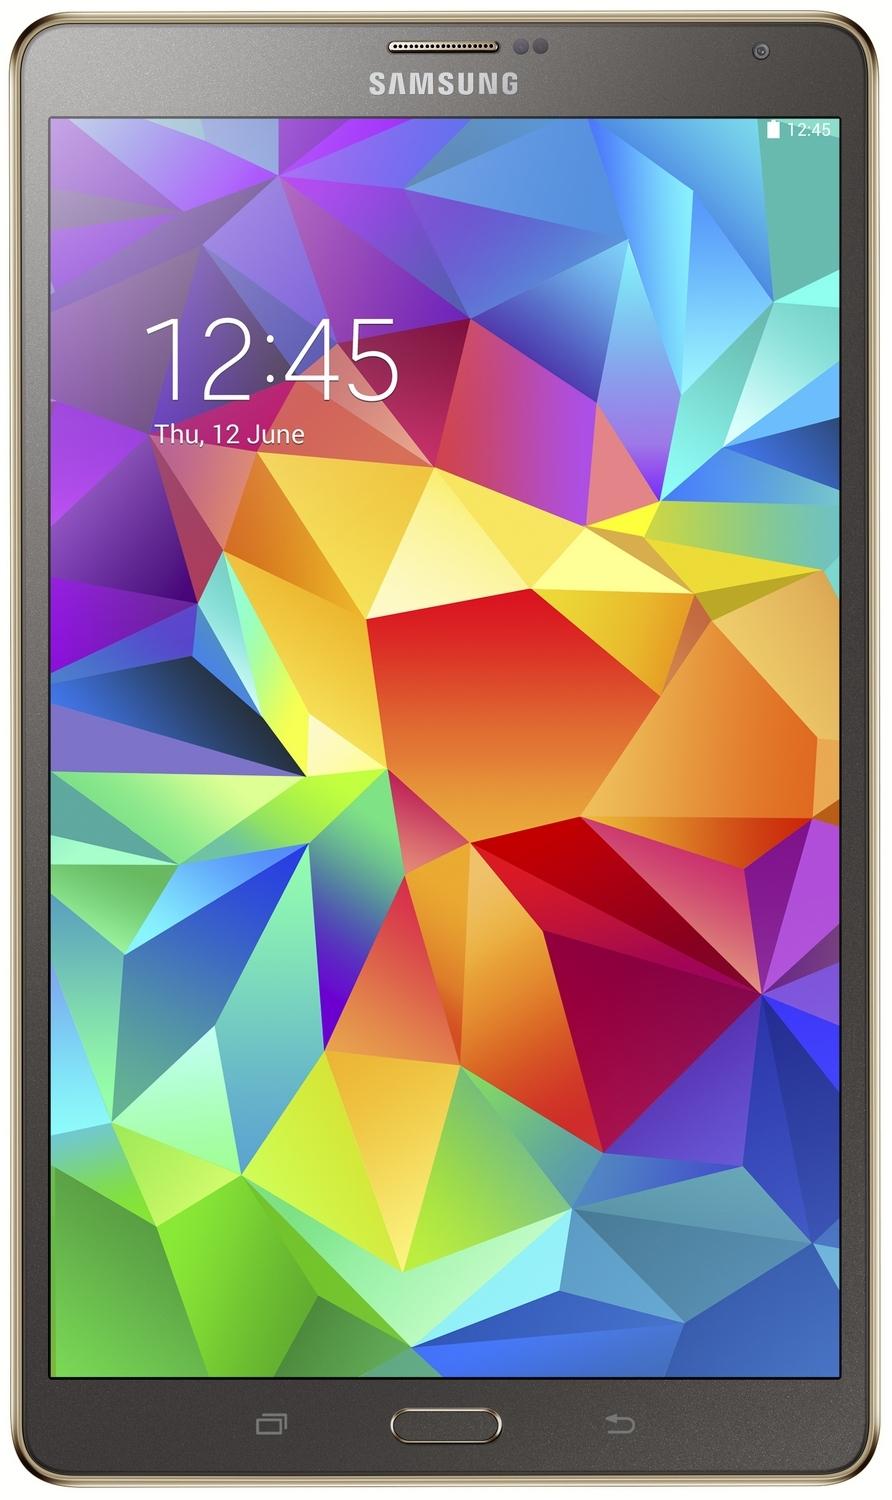 Samsung Galaxy Tab S 8.4 (Titanium Bronze) SM-T705NTSA